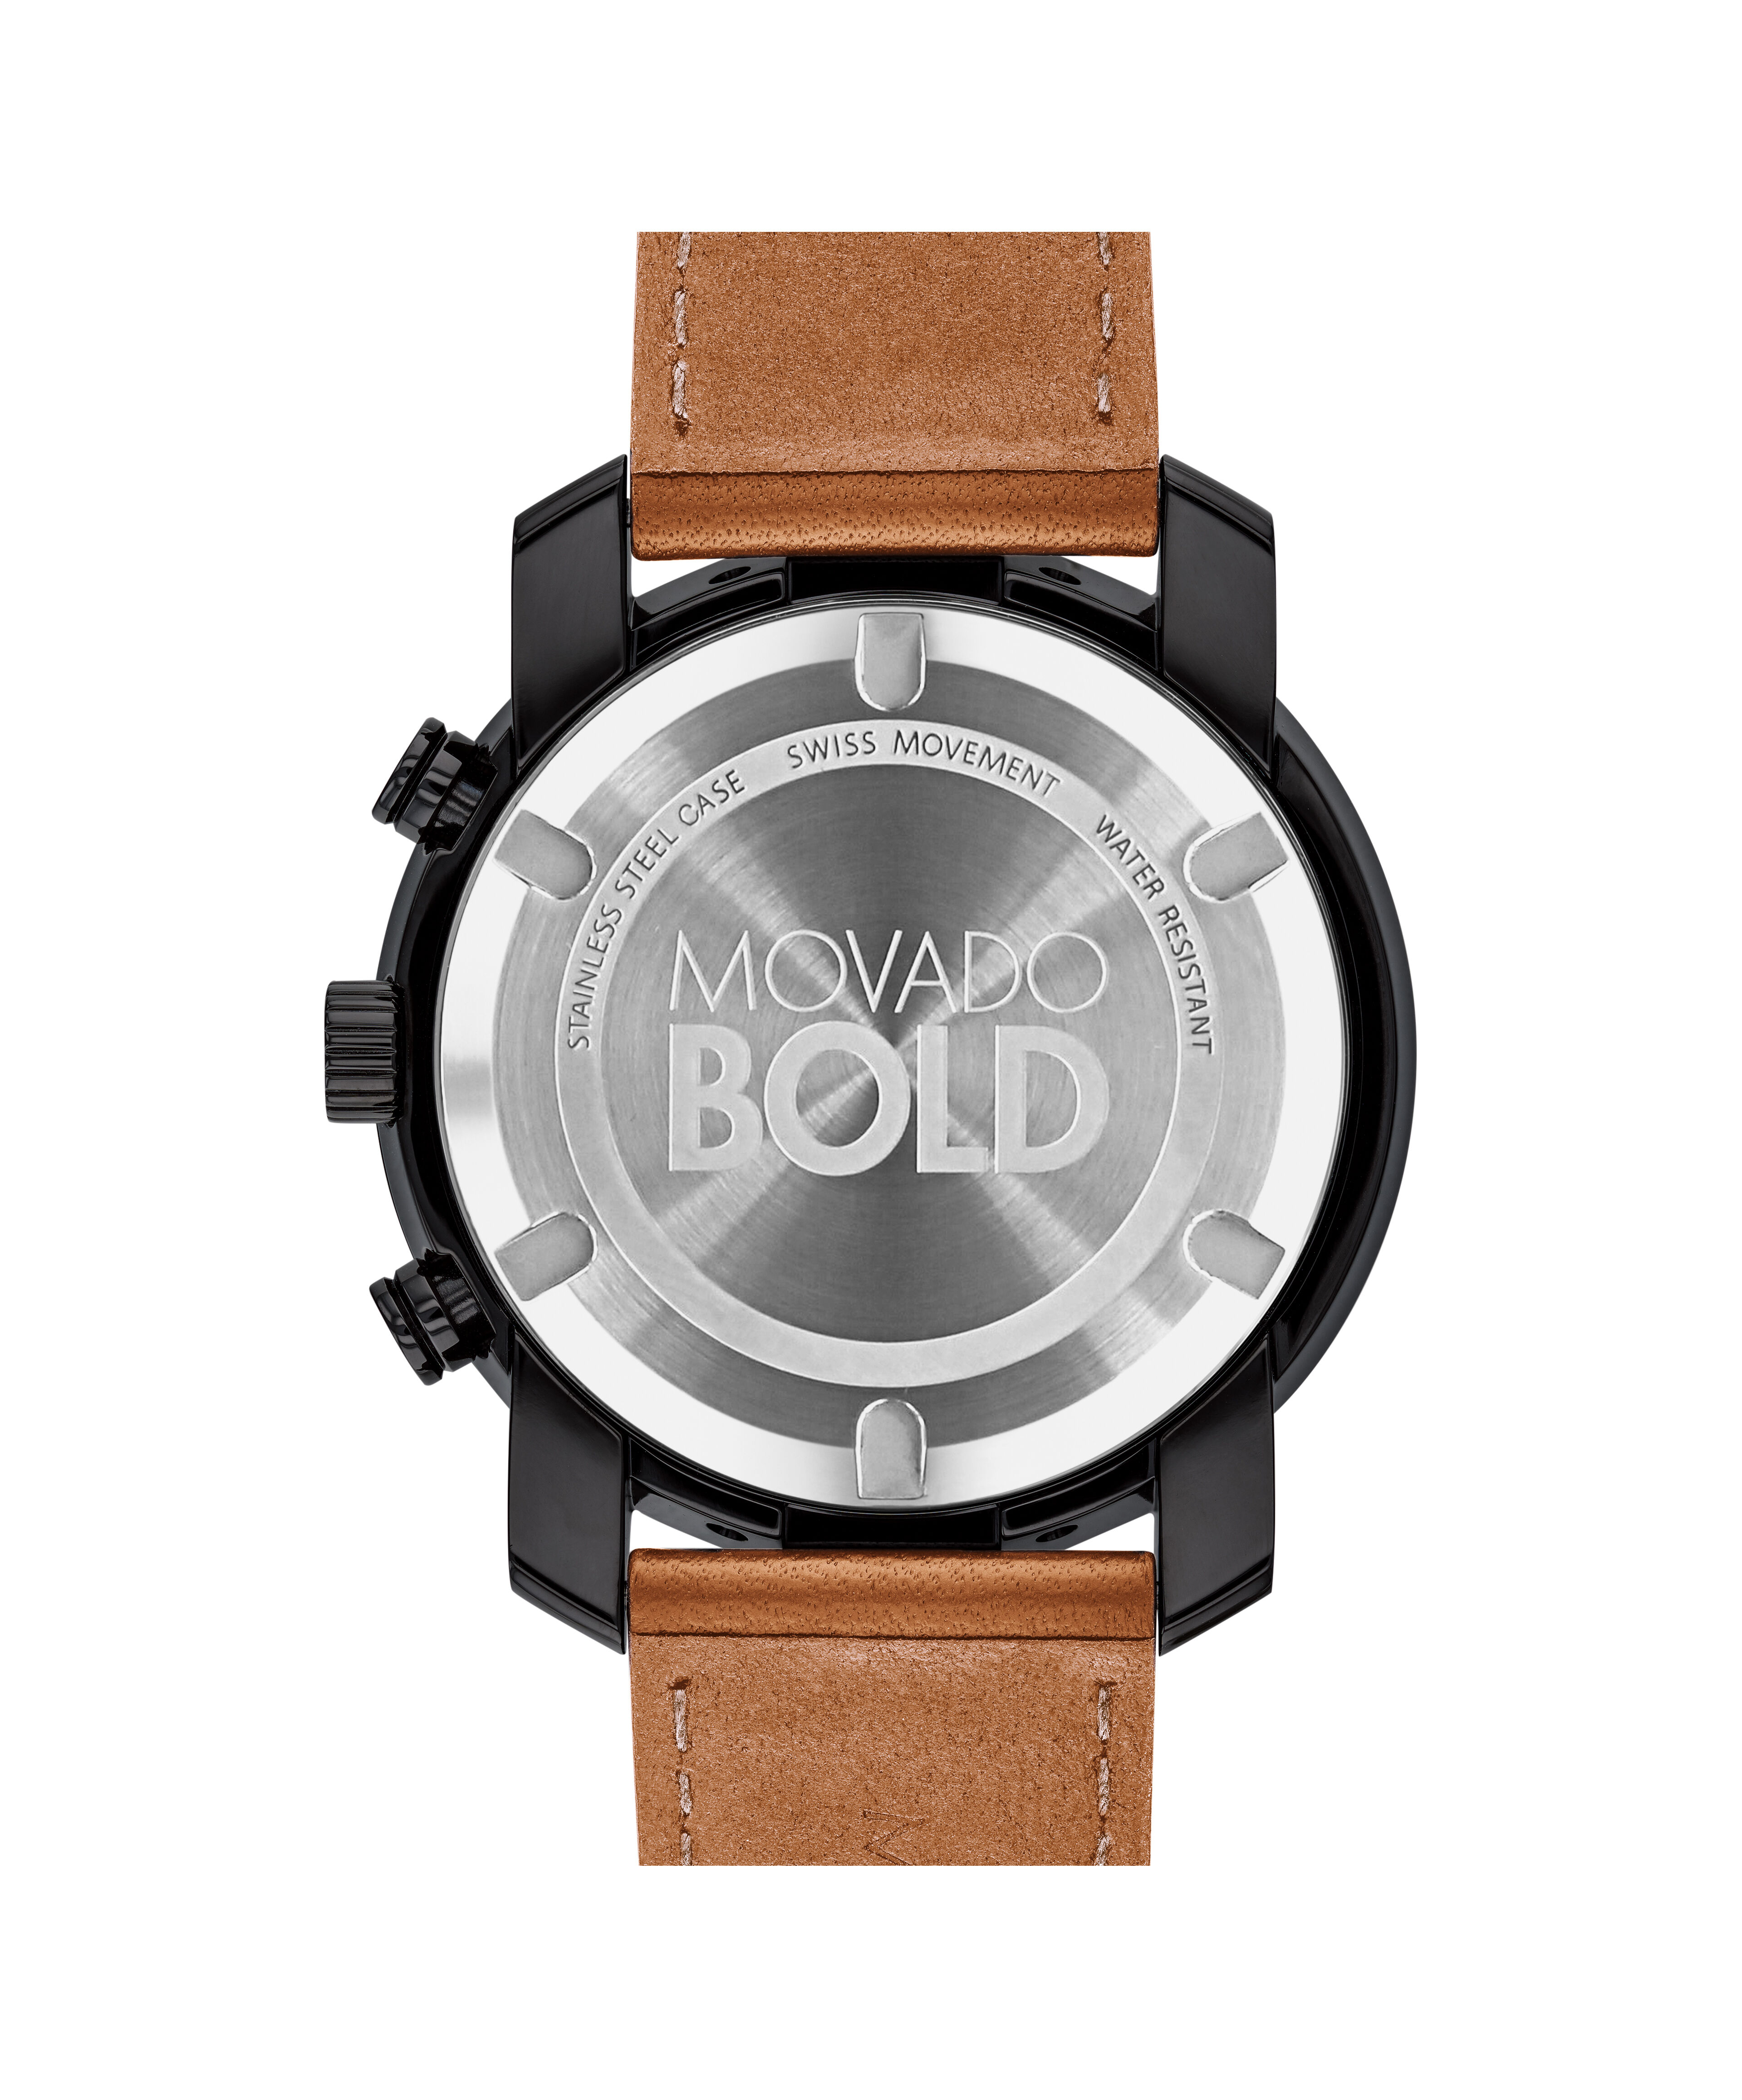 Movado “431” Automatic Men’s Watch w/Original Box